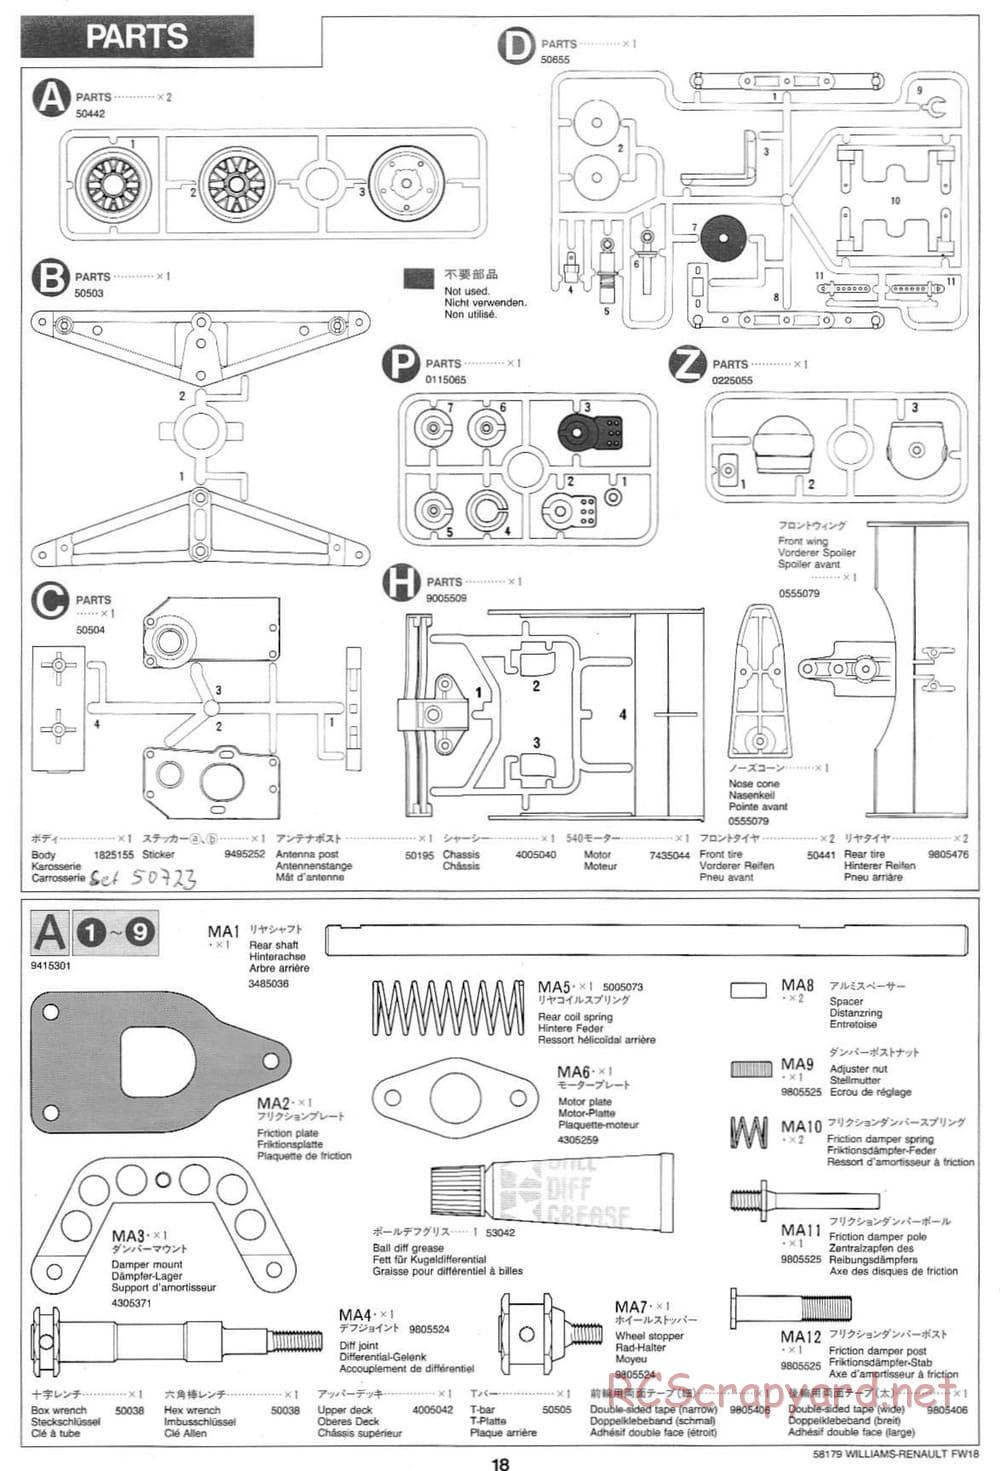 Tamiya - Williams Renault FW18 - F103RS Chassis - Manual - Page 18